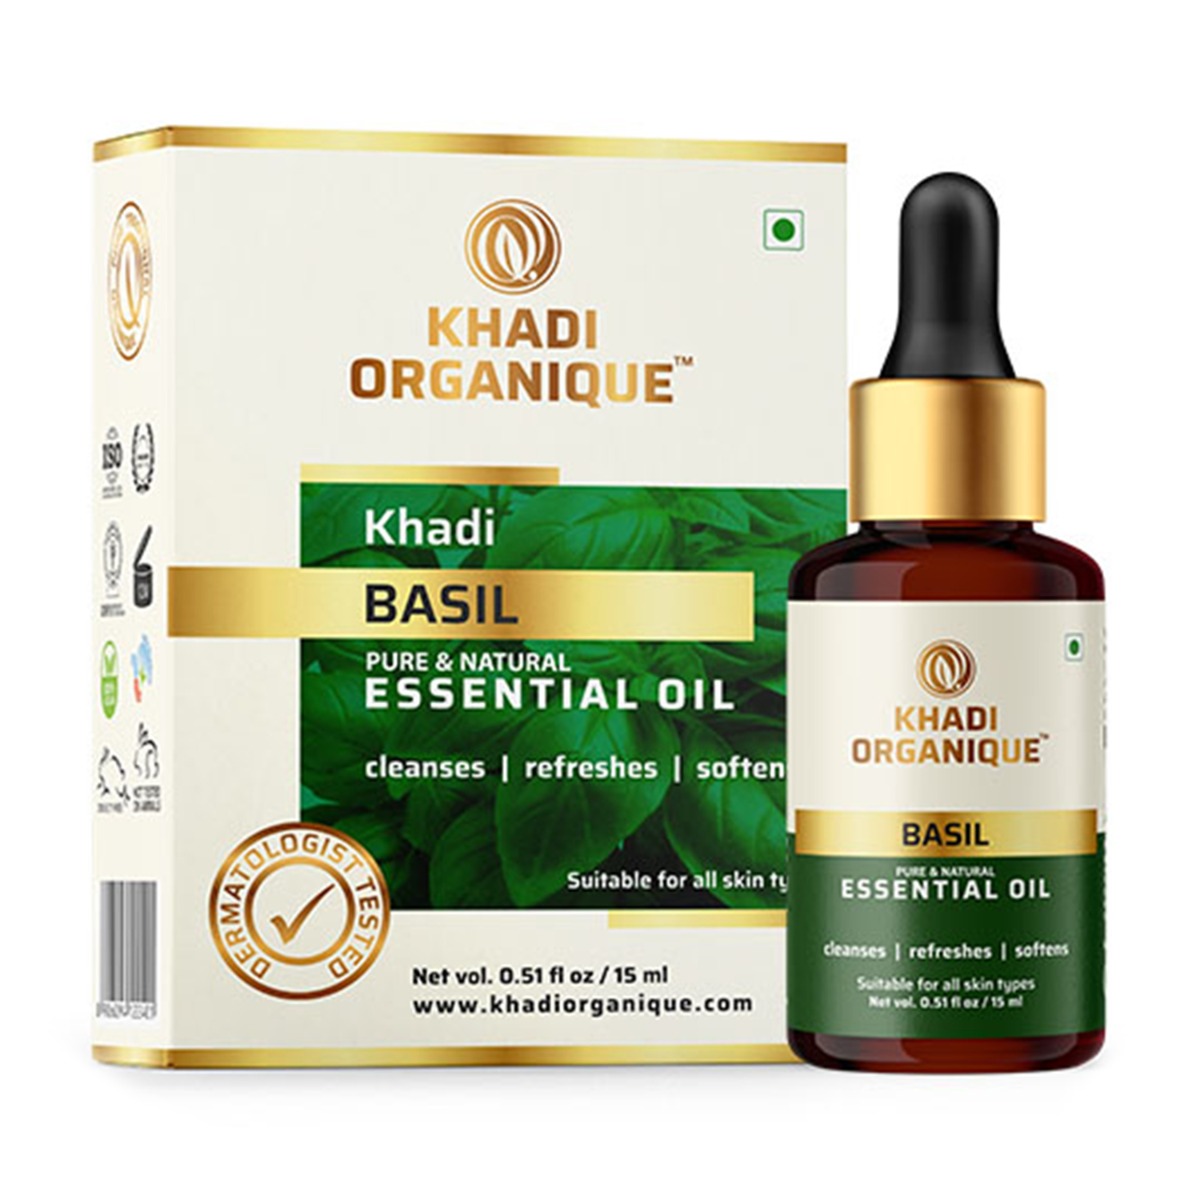 Khadi Organique Basil Pure & Natural Essential Oil, 15ml